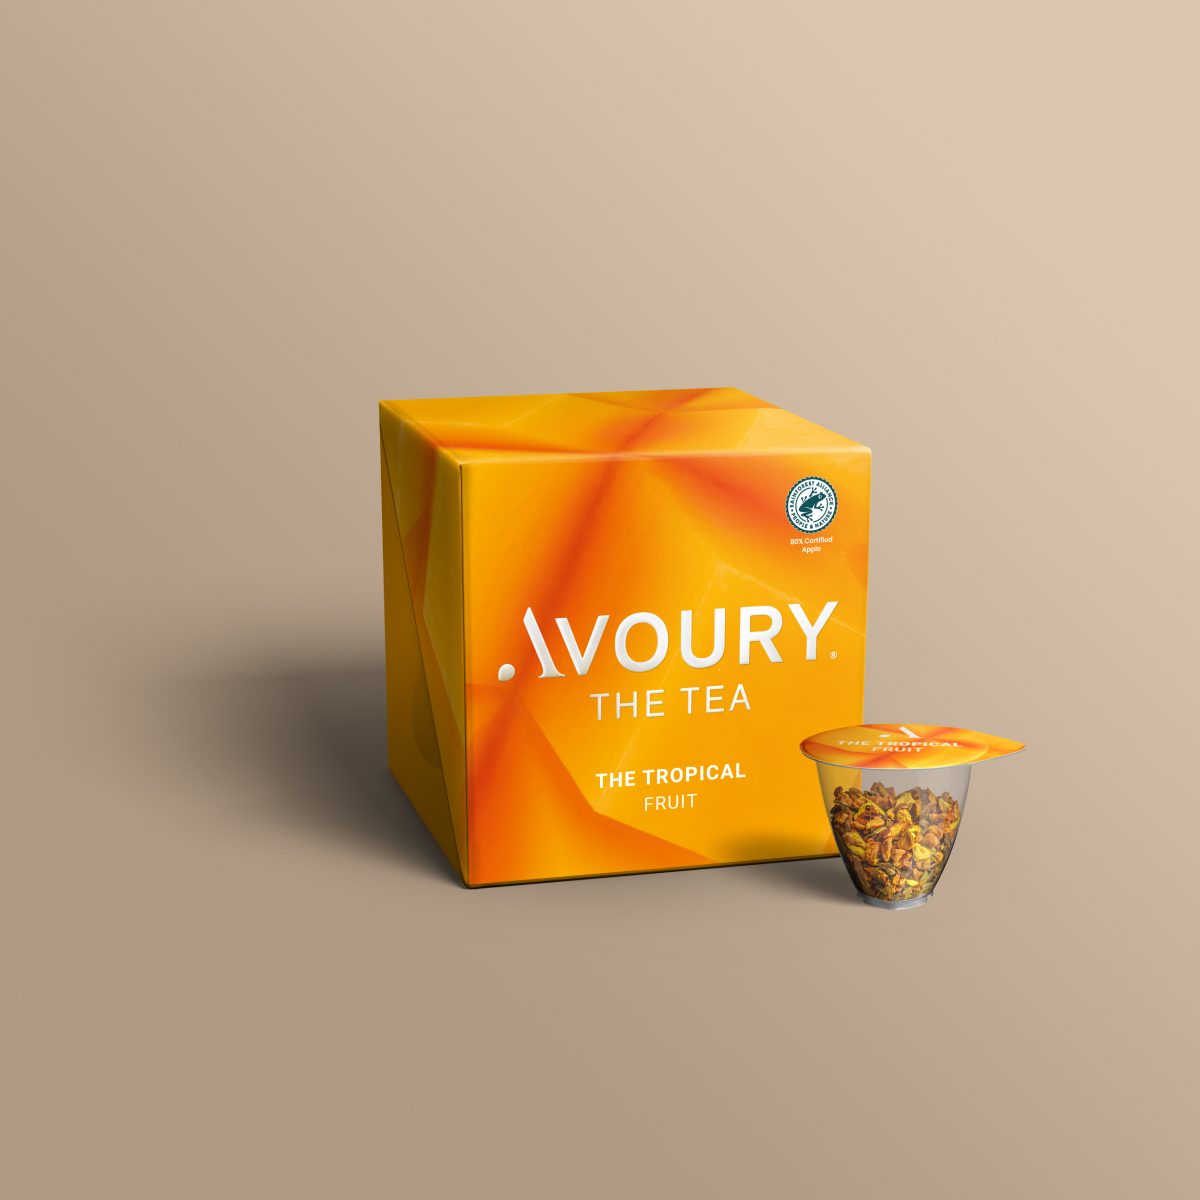 The Tropical  | Avoury. The Tea.